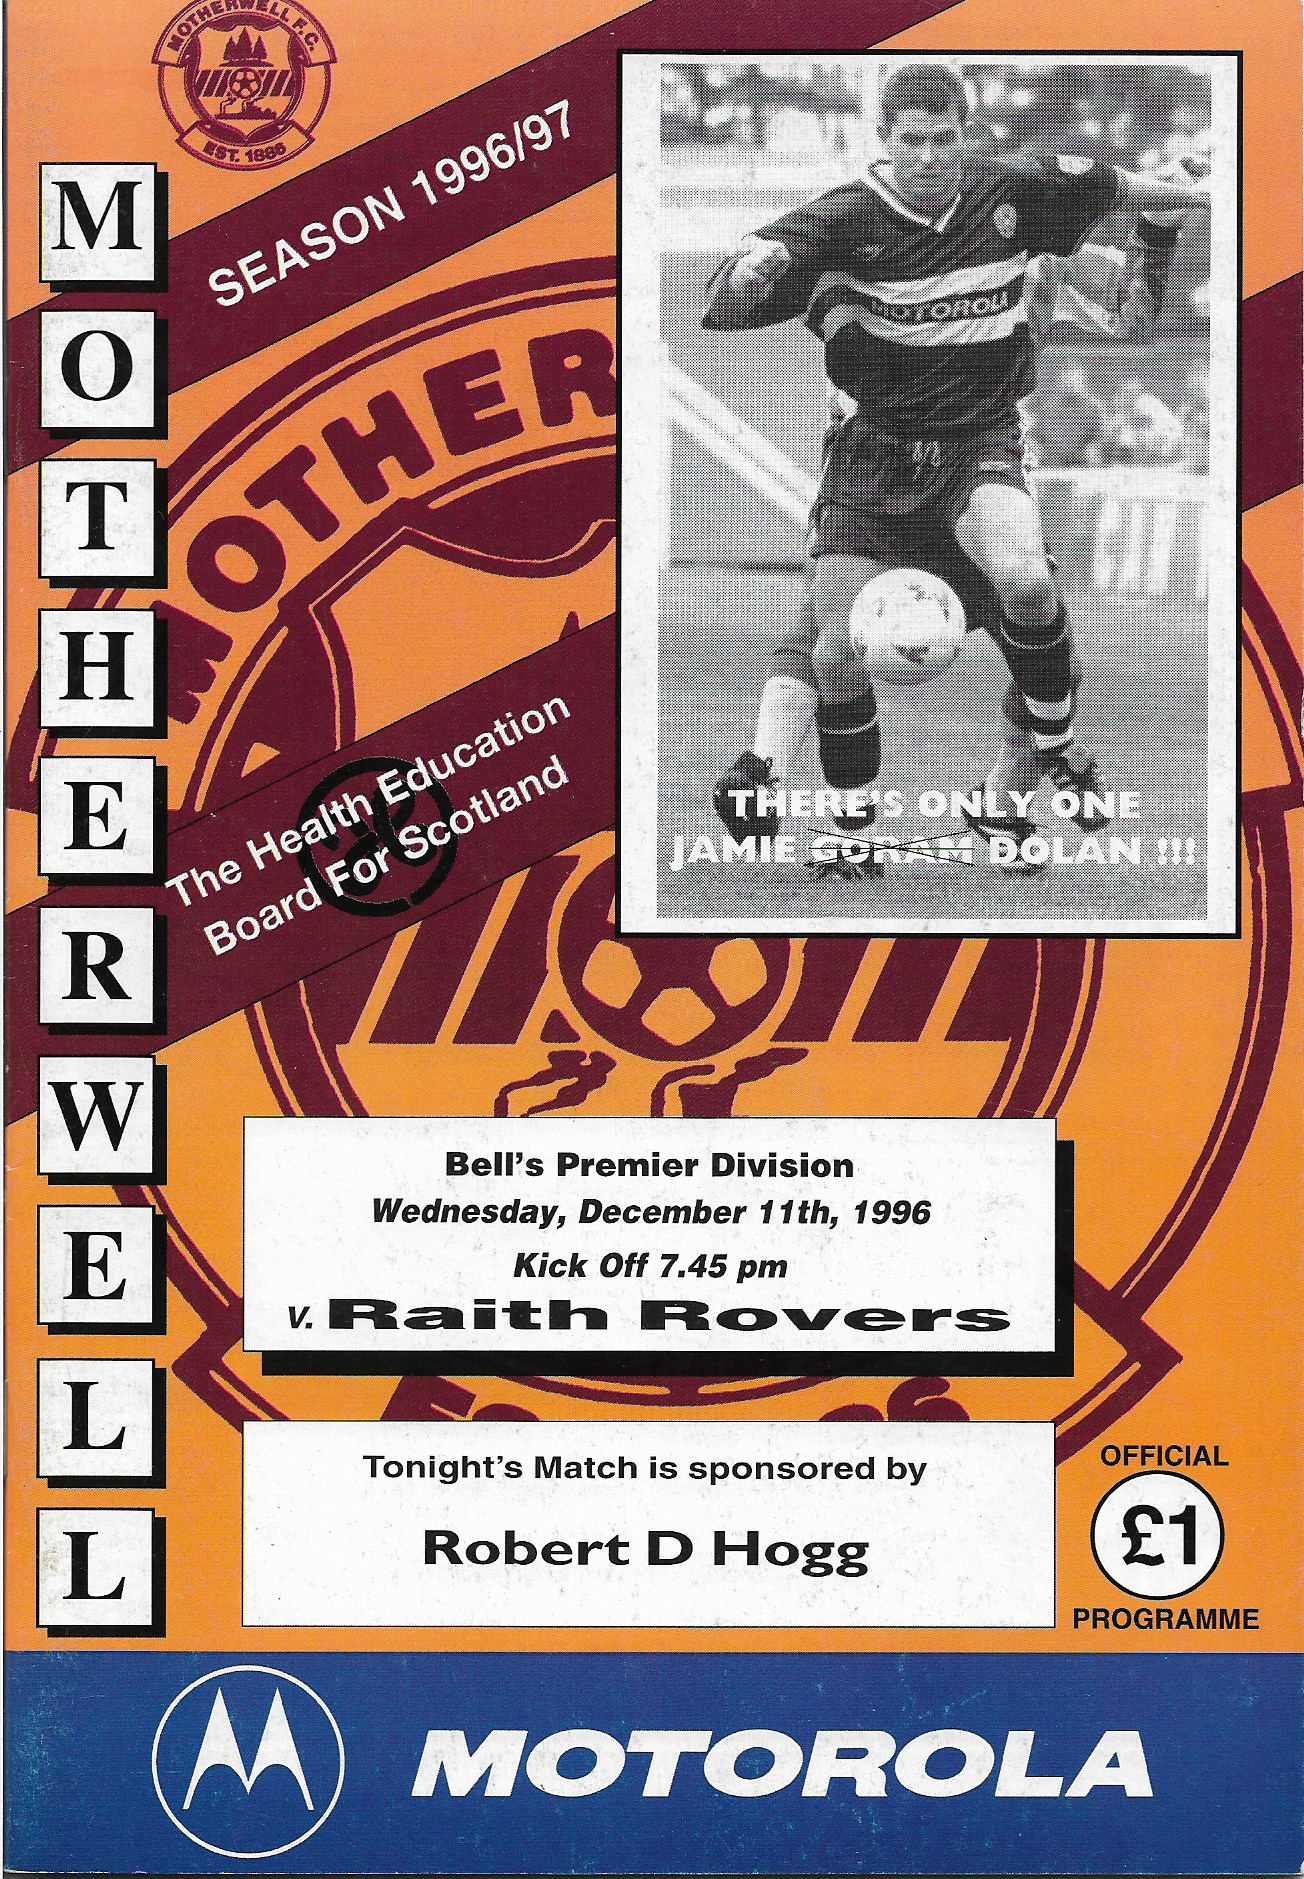 Programme Cover versus Raith Rovers